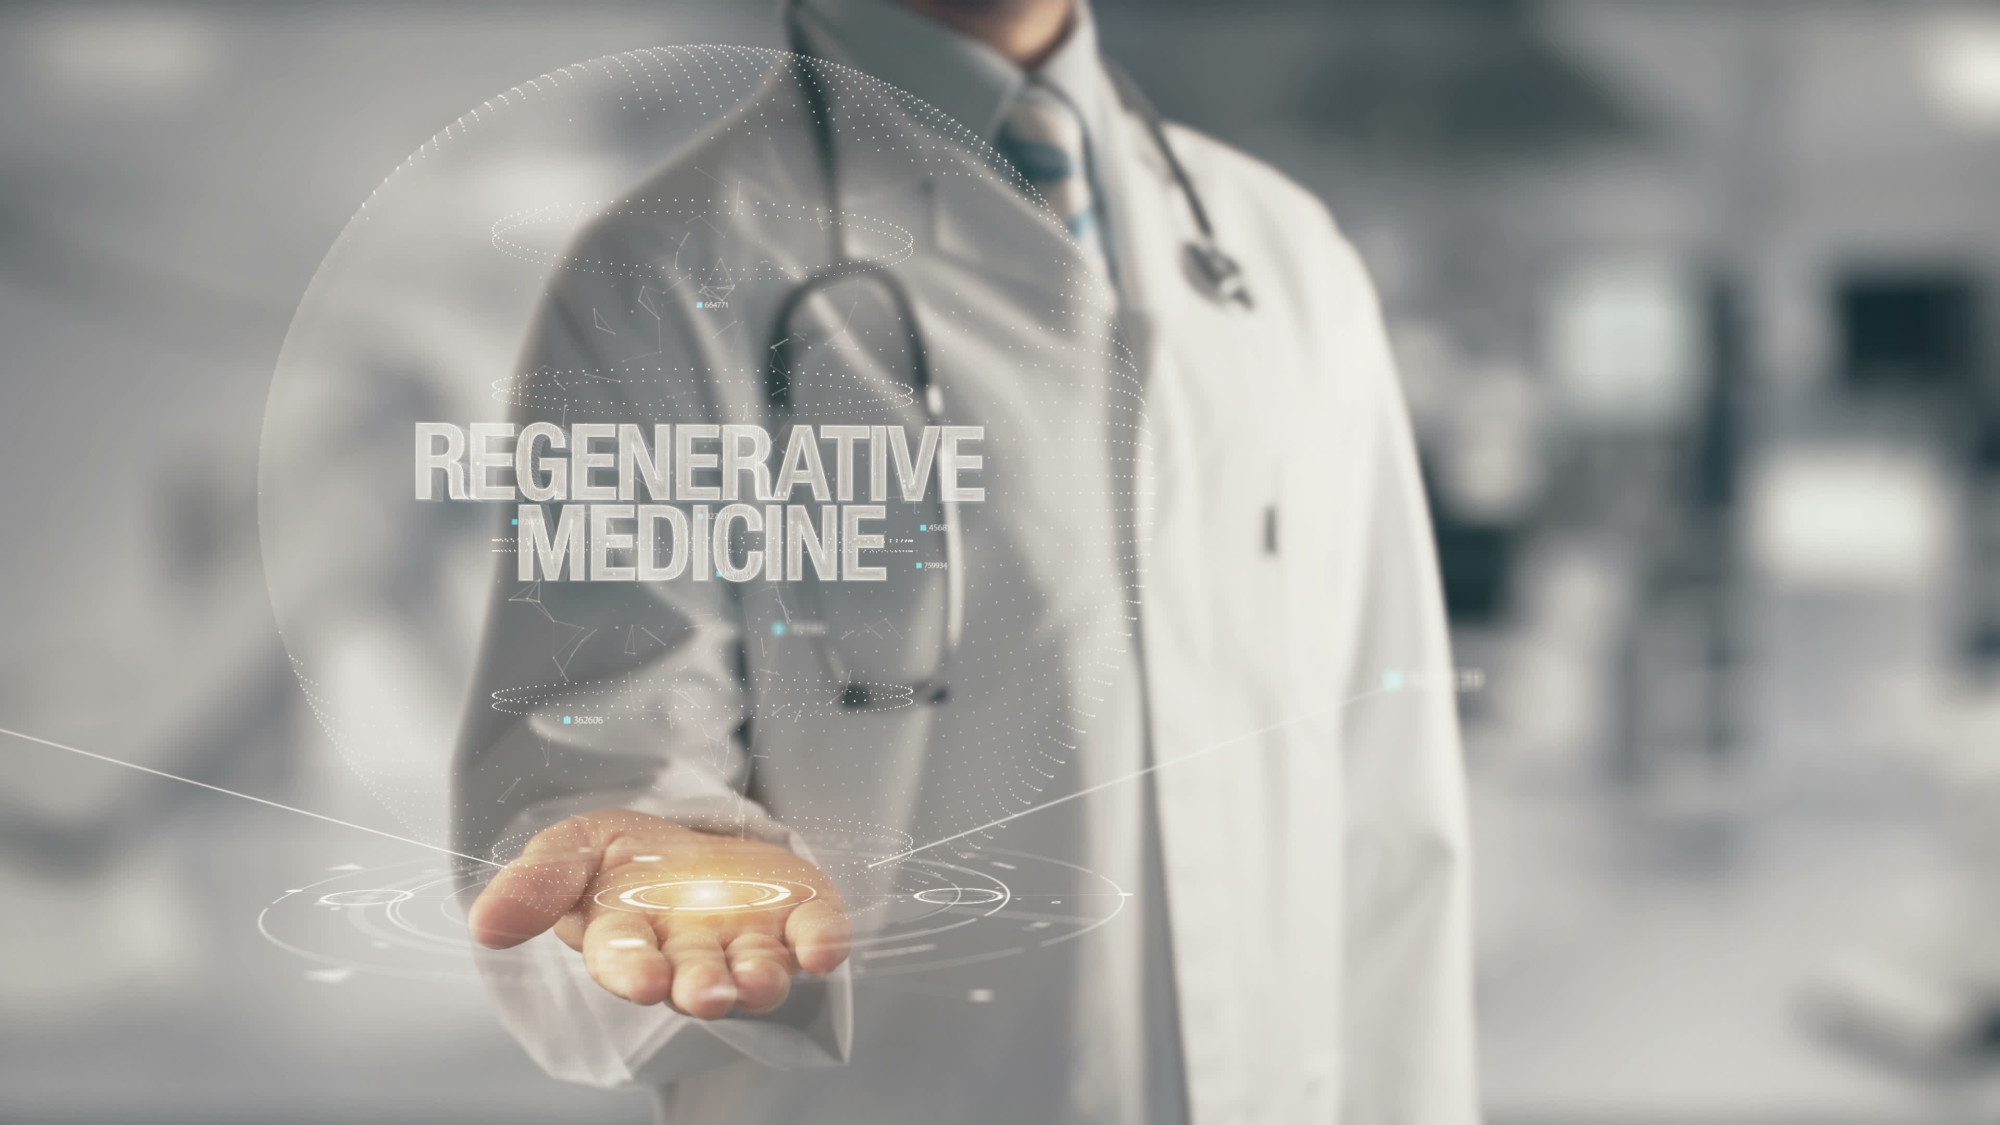 regenerative medicine text and doctor